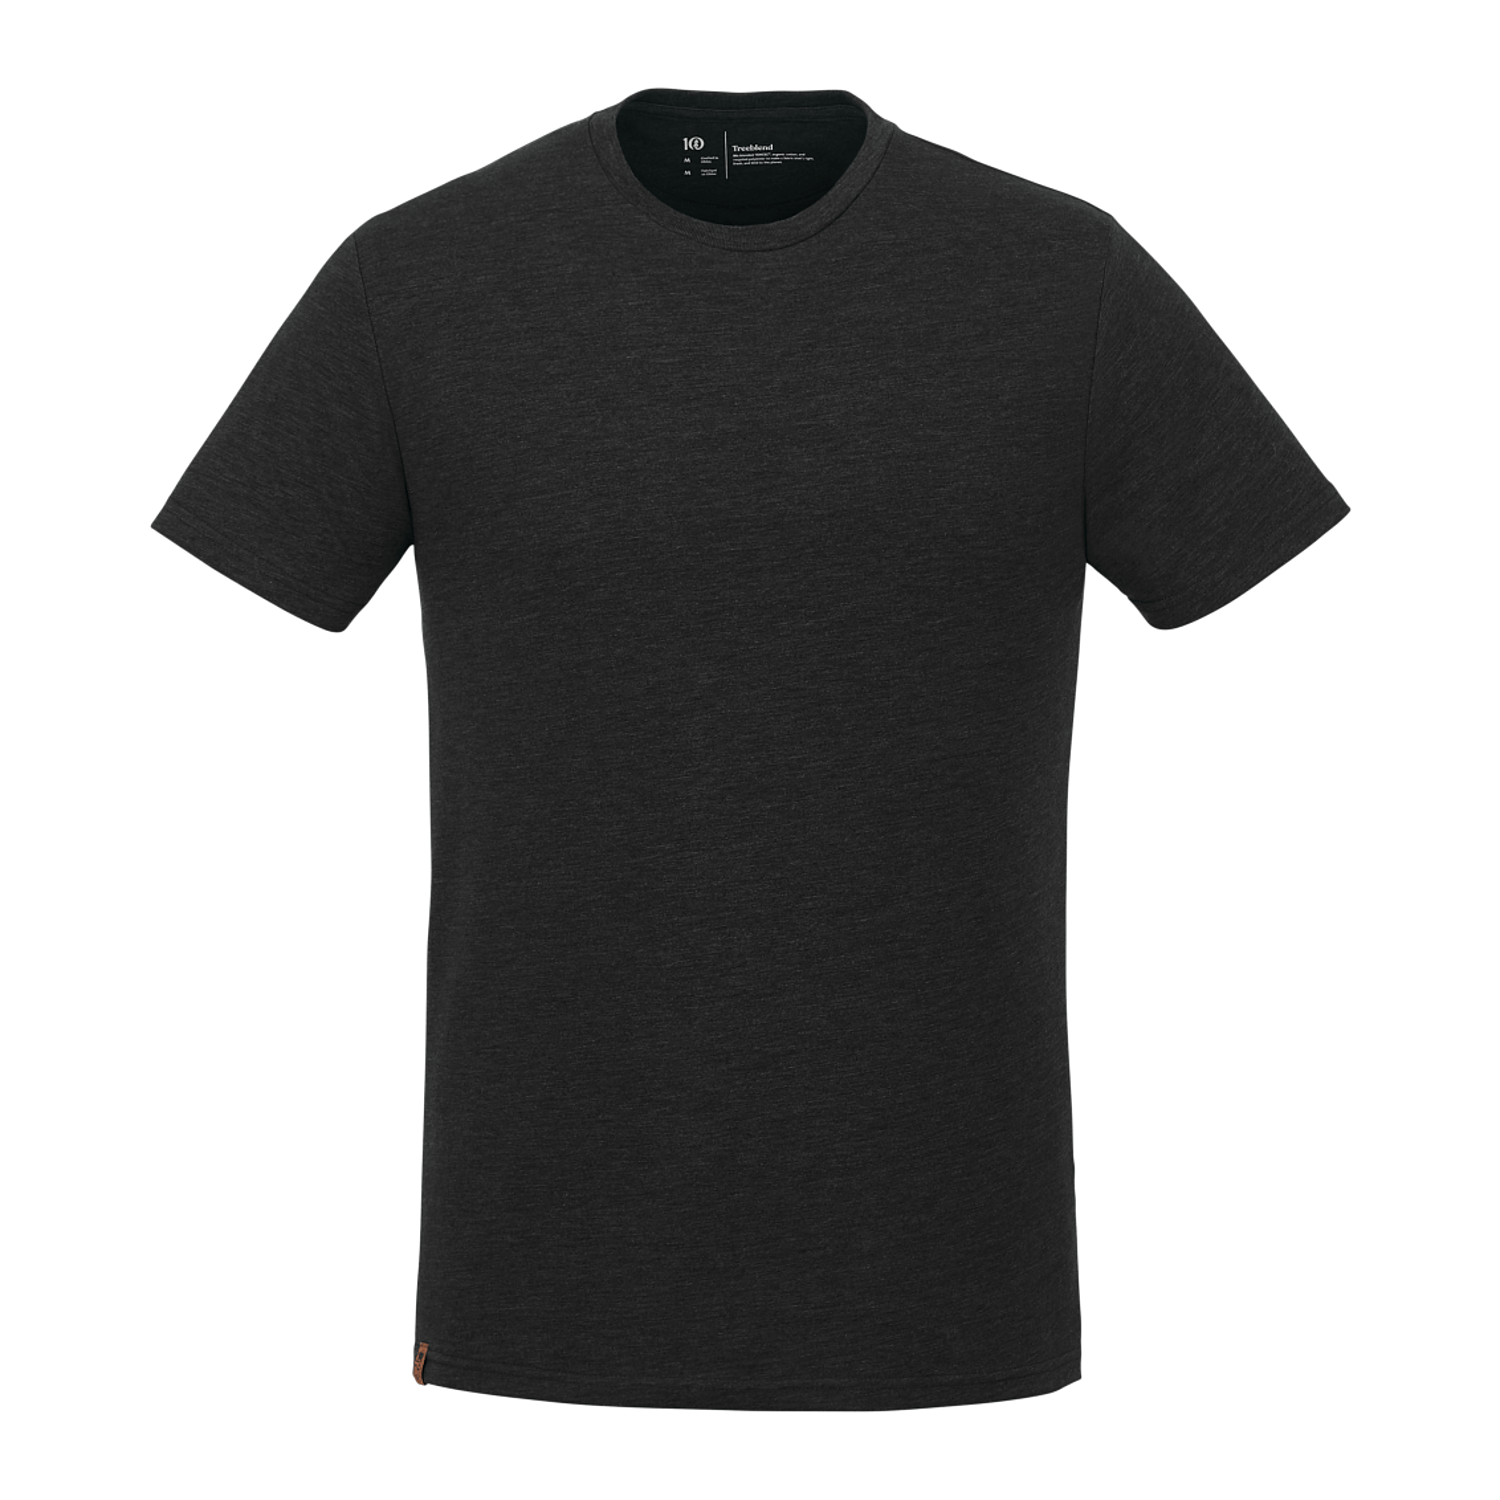 tentree T-shirts S / Meteorite Black Heather tentree - Men's TreeBlend Classic T-Shirt